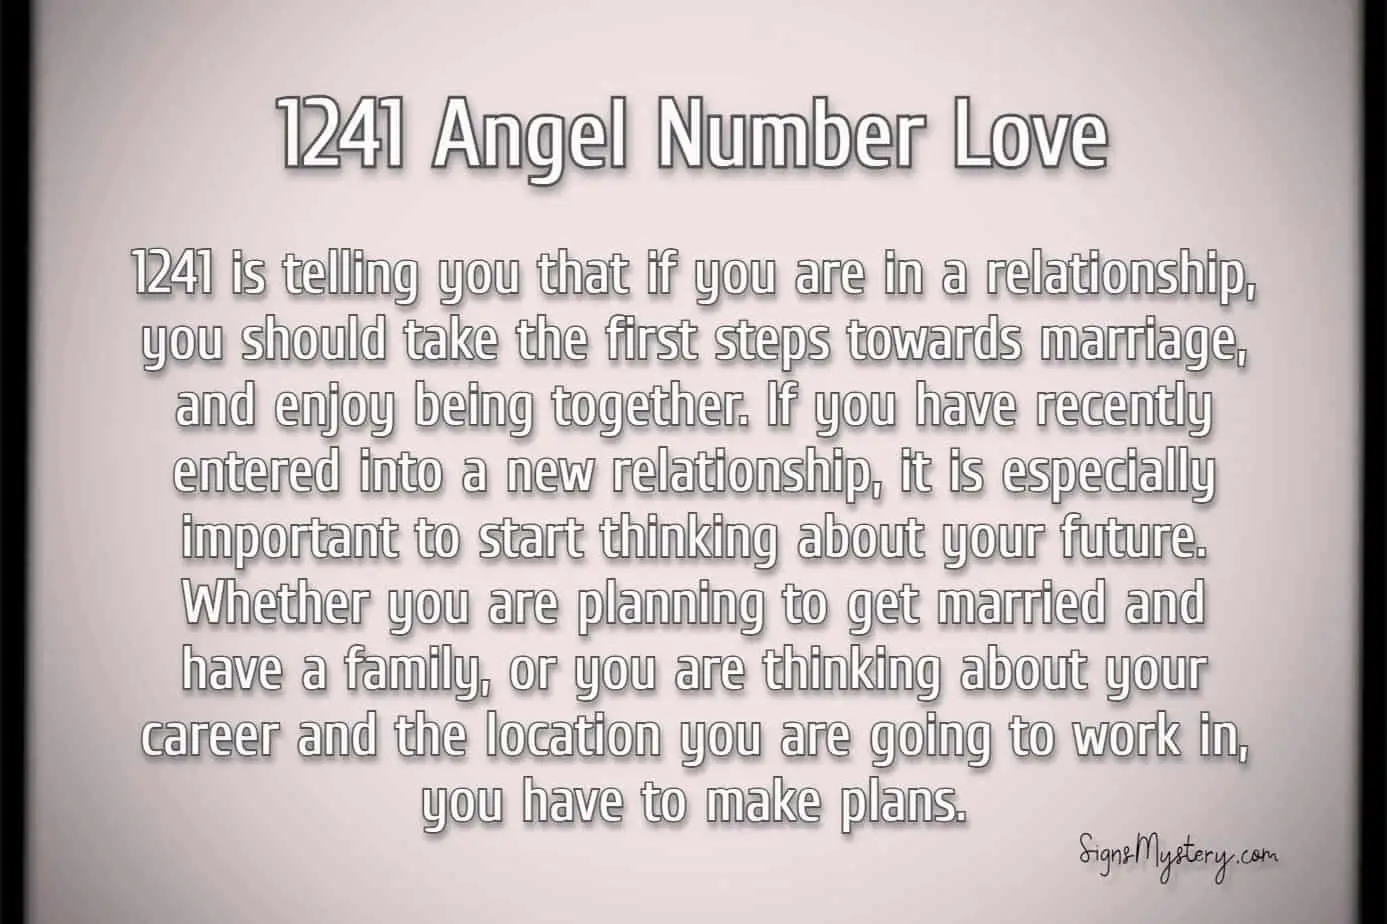 1241 angel number love